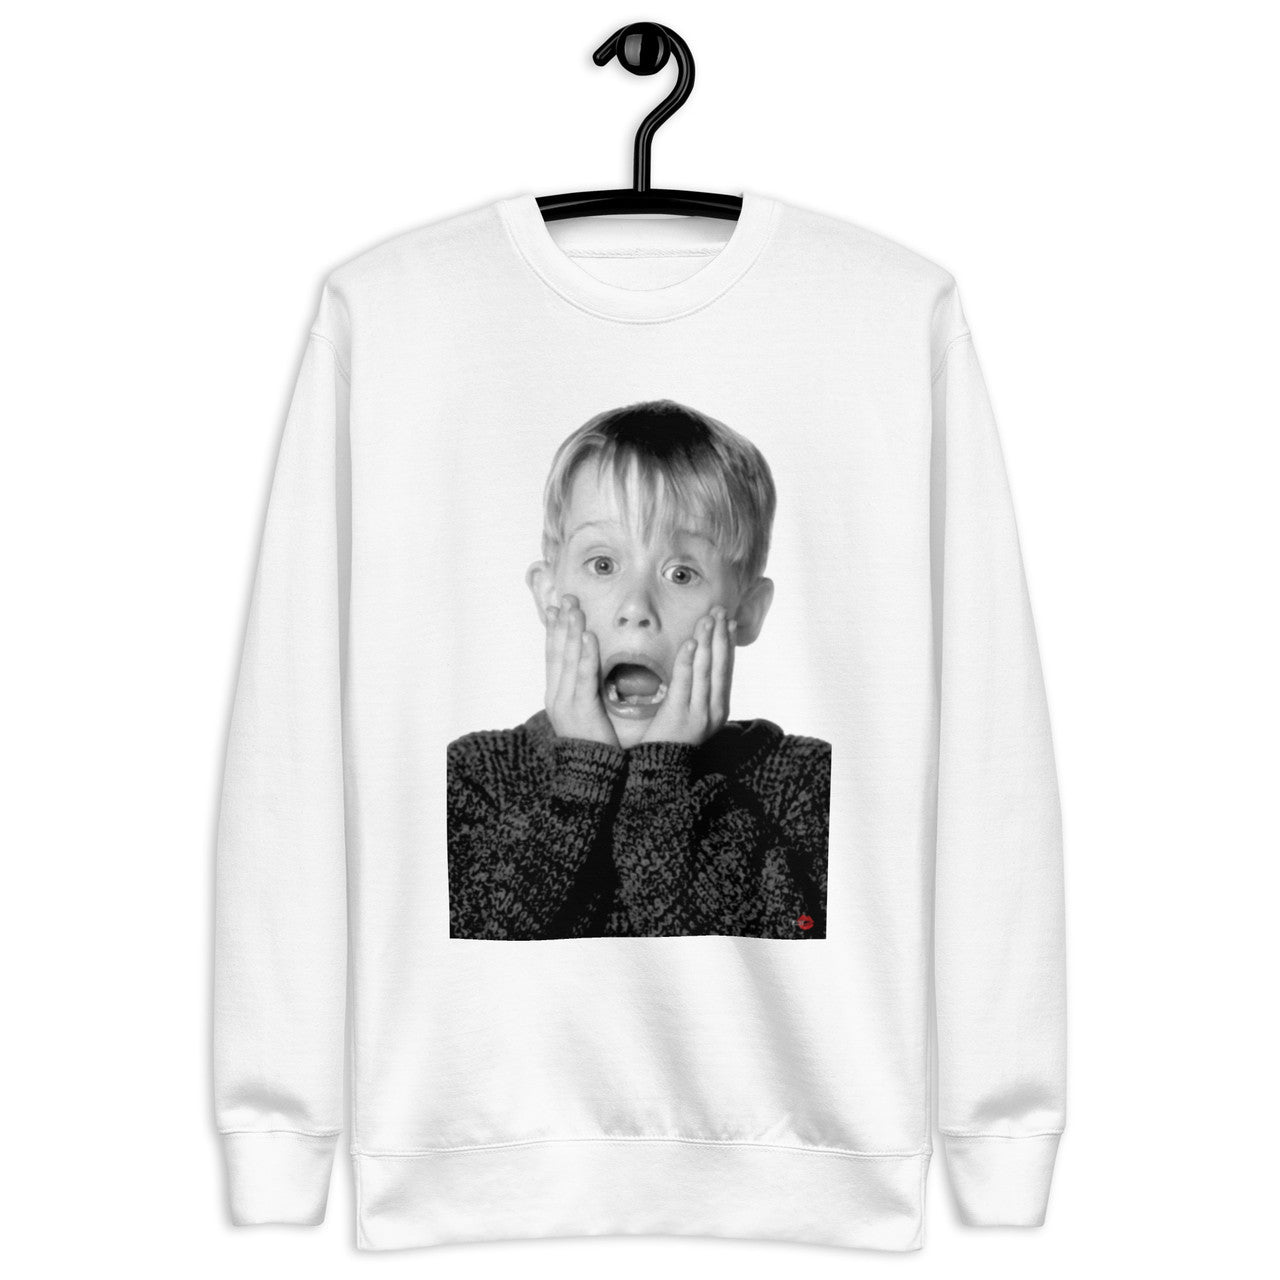 Kevin KiSS Unisex Premium Sweatshirt - Home Alone Face Christmas inspired Macaulay Culkin